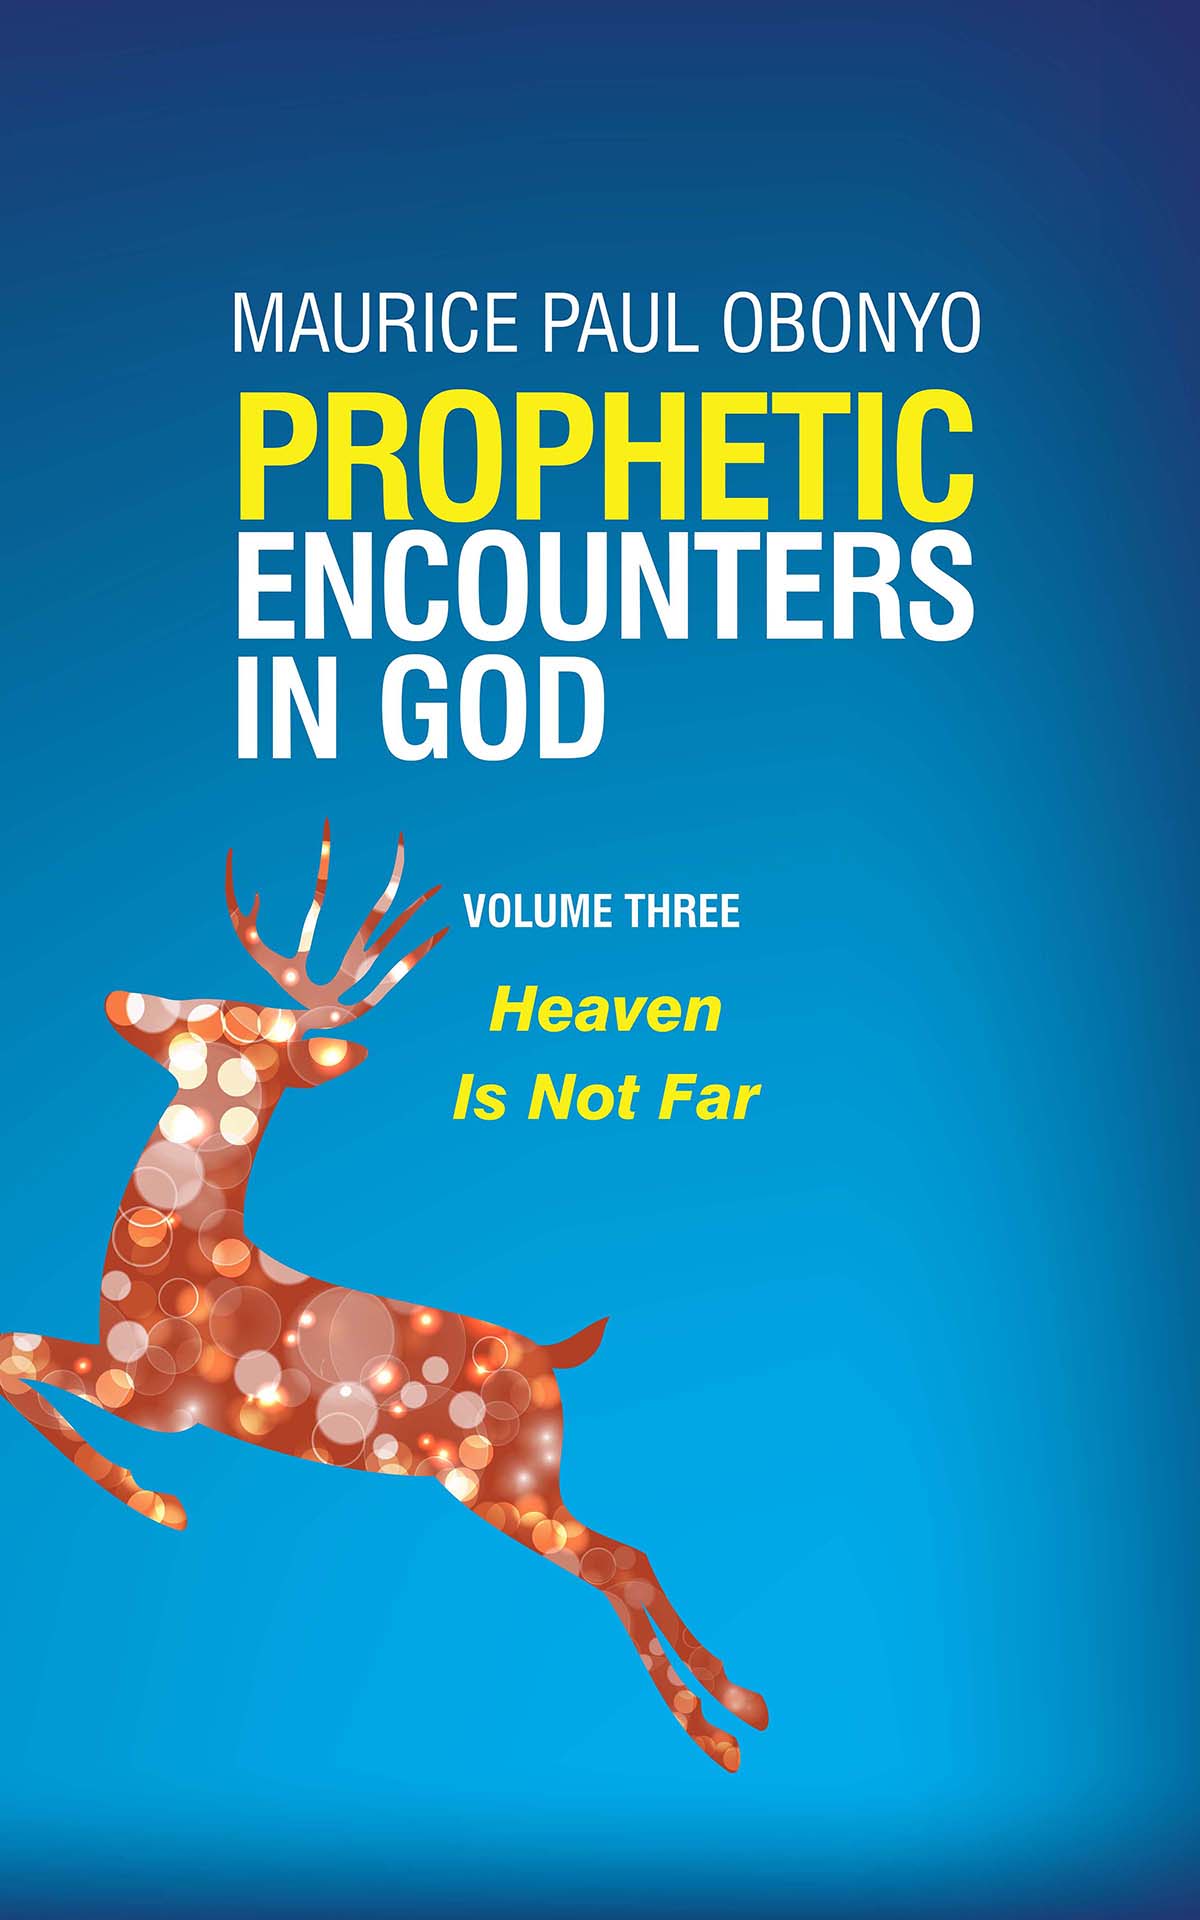 FREE: PROPHETIC ENCOUNTERS IN GOD: Heaven Is Not Far by Maurice Paul Obonyo